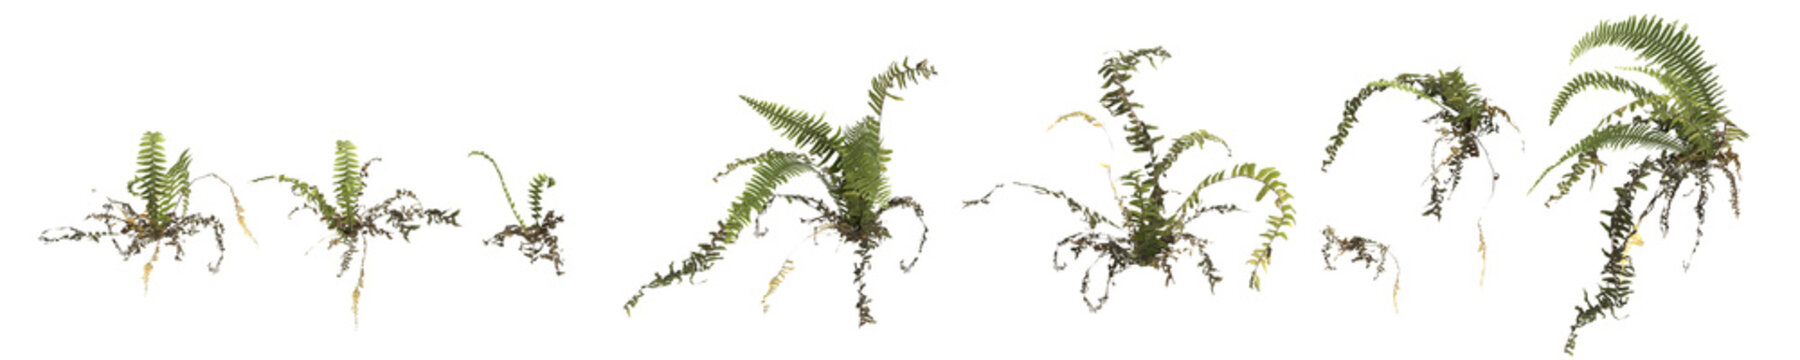 3d illustration of set fern plant isolated on transparent background